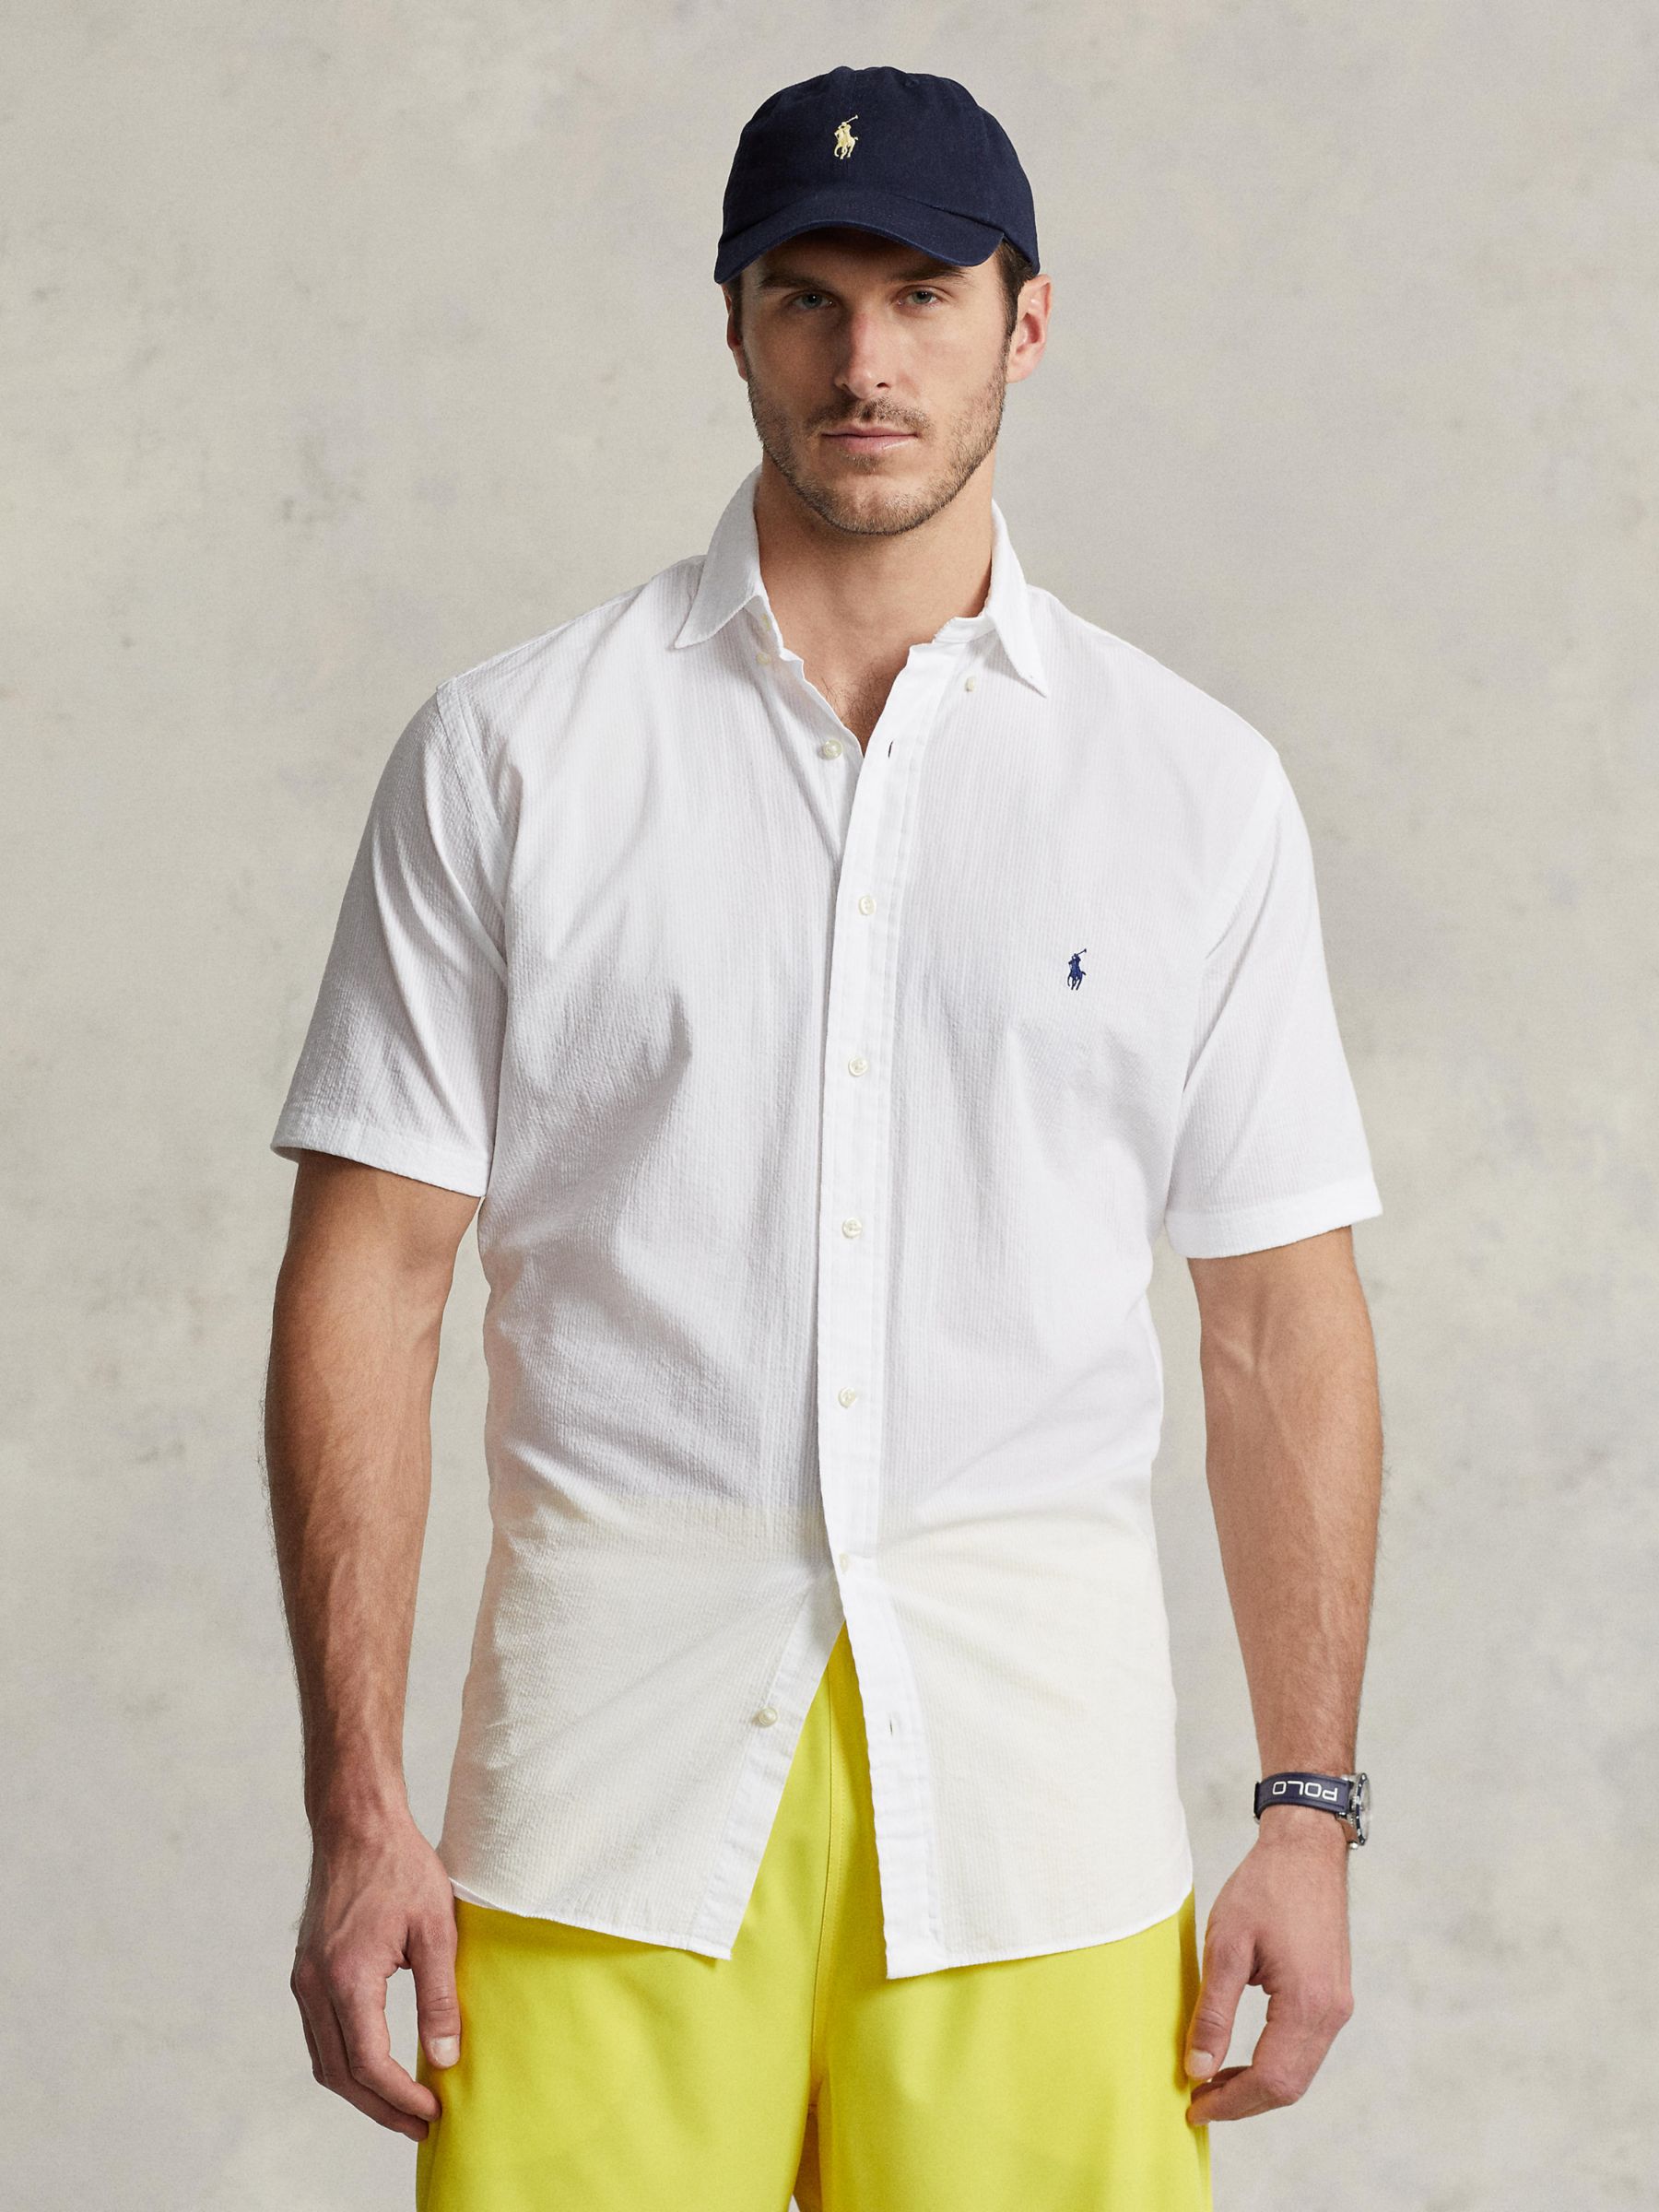 Ralph Lauren Seersucker Shirt, White, 2LT